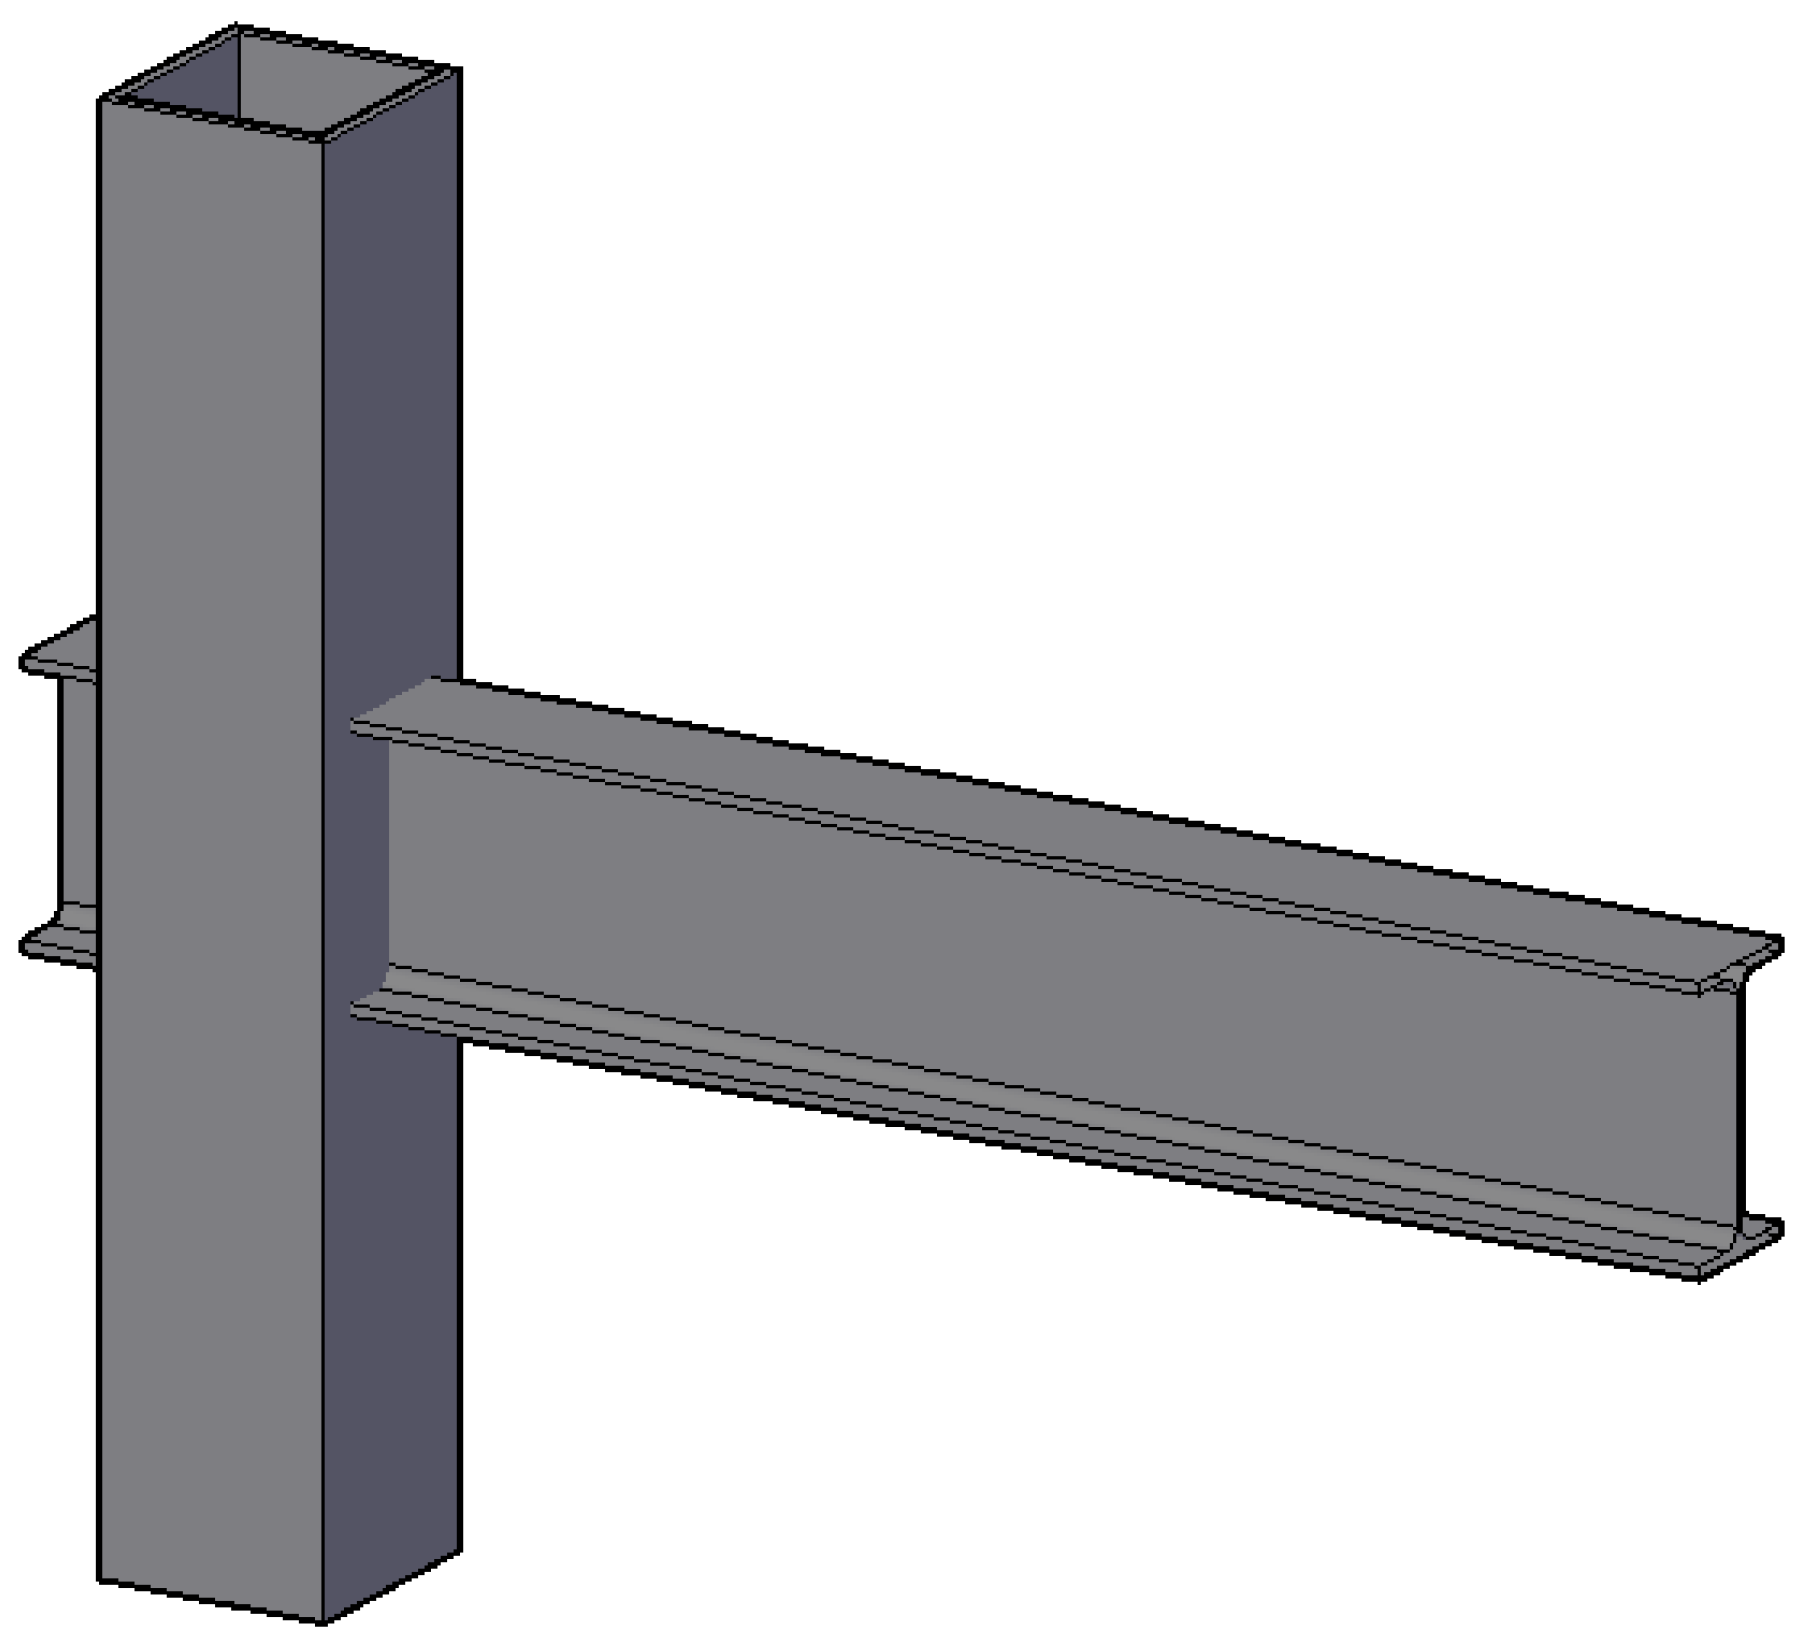 How do we calculate the cutting length of rectangular stirrups? - Quora